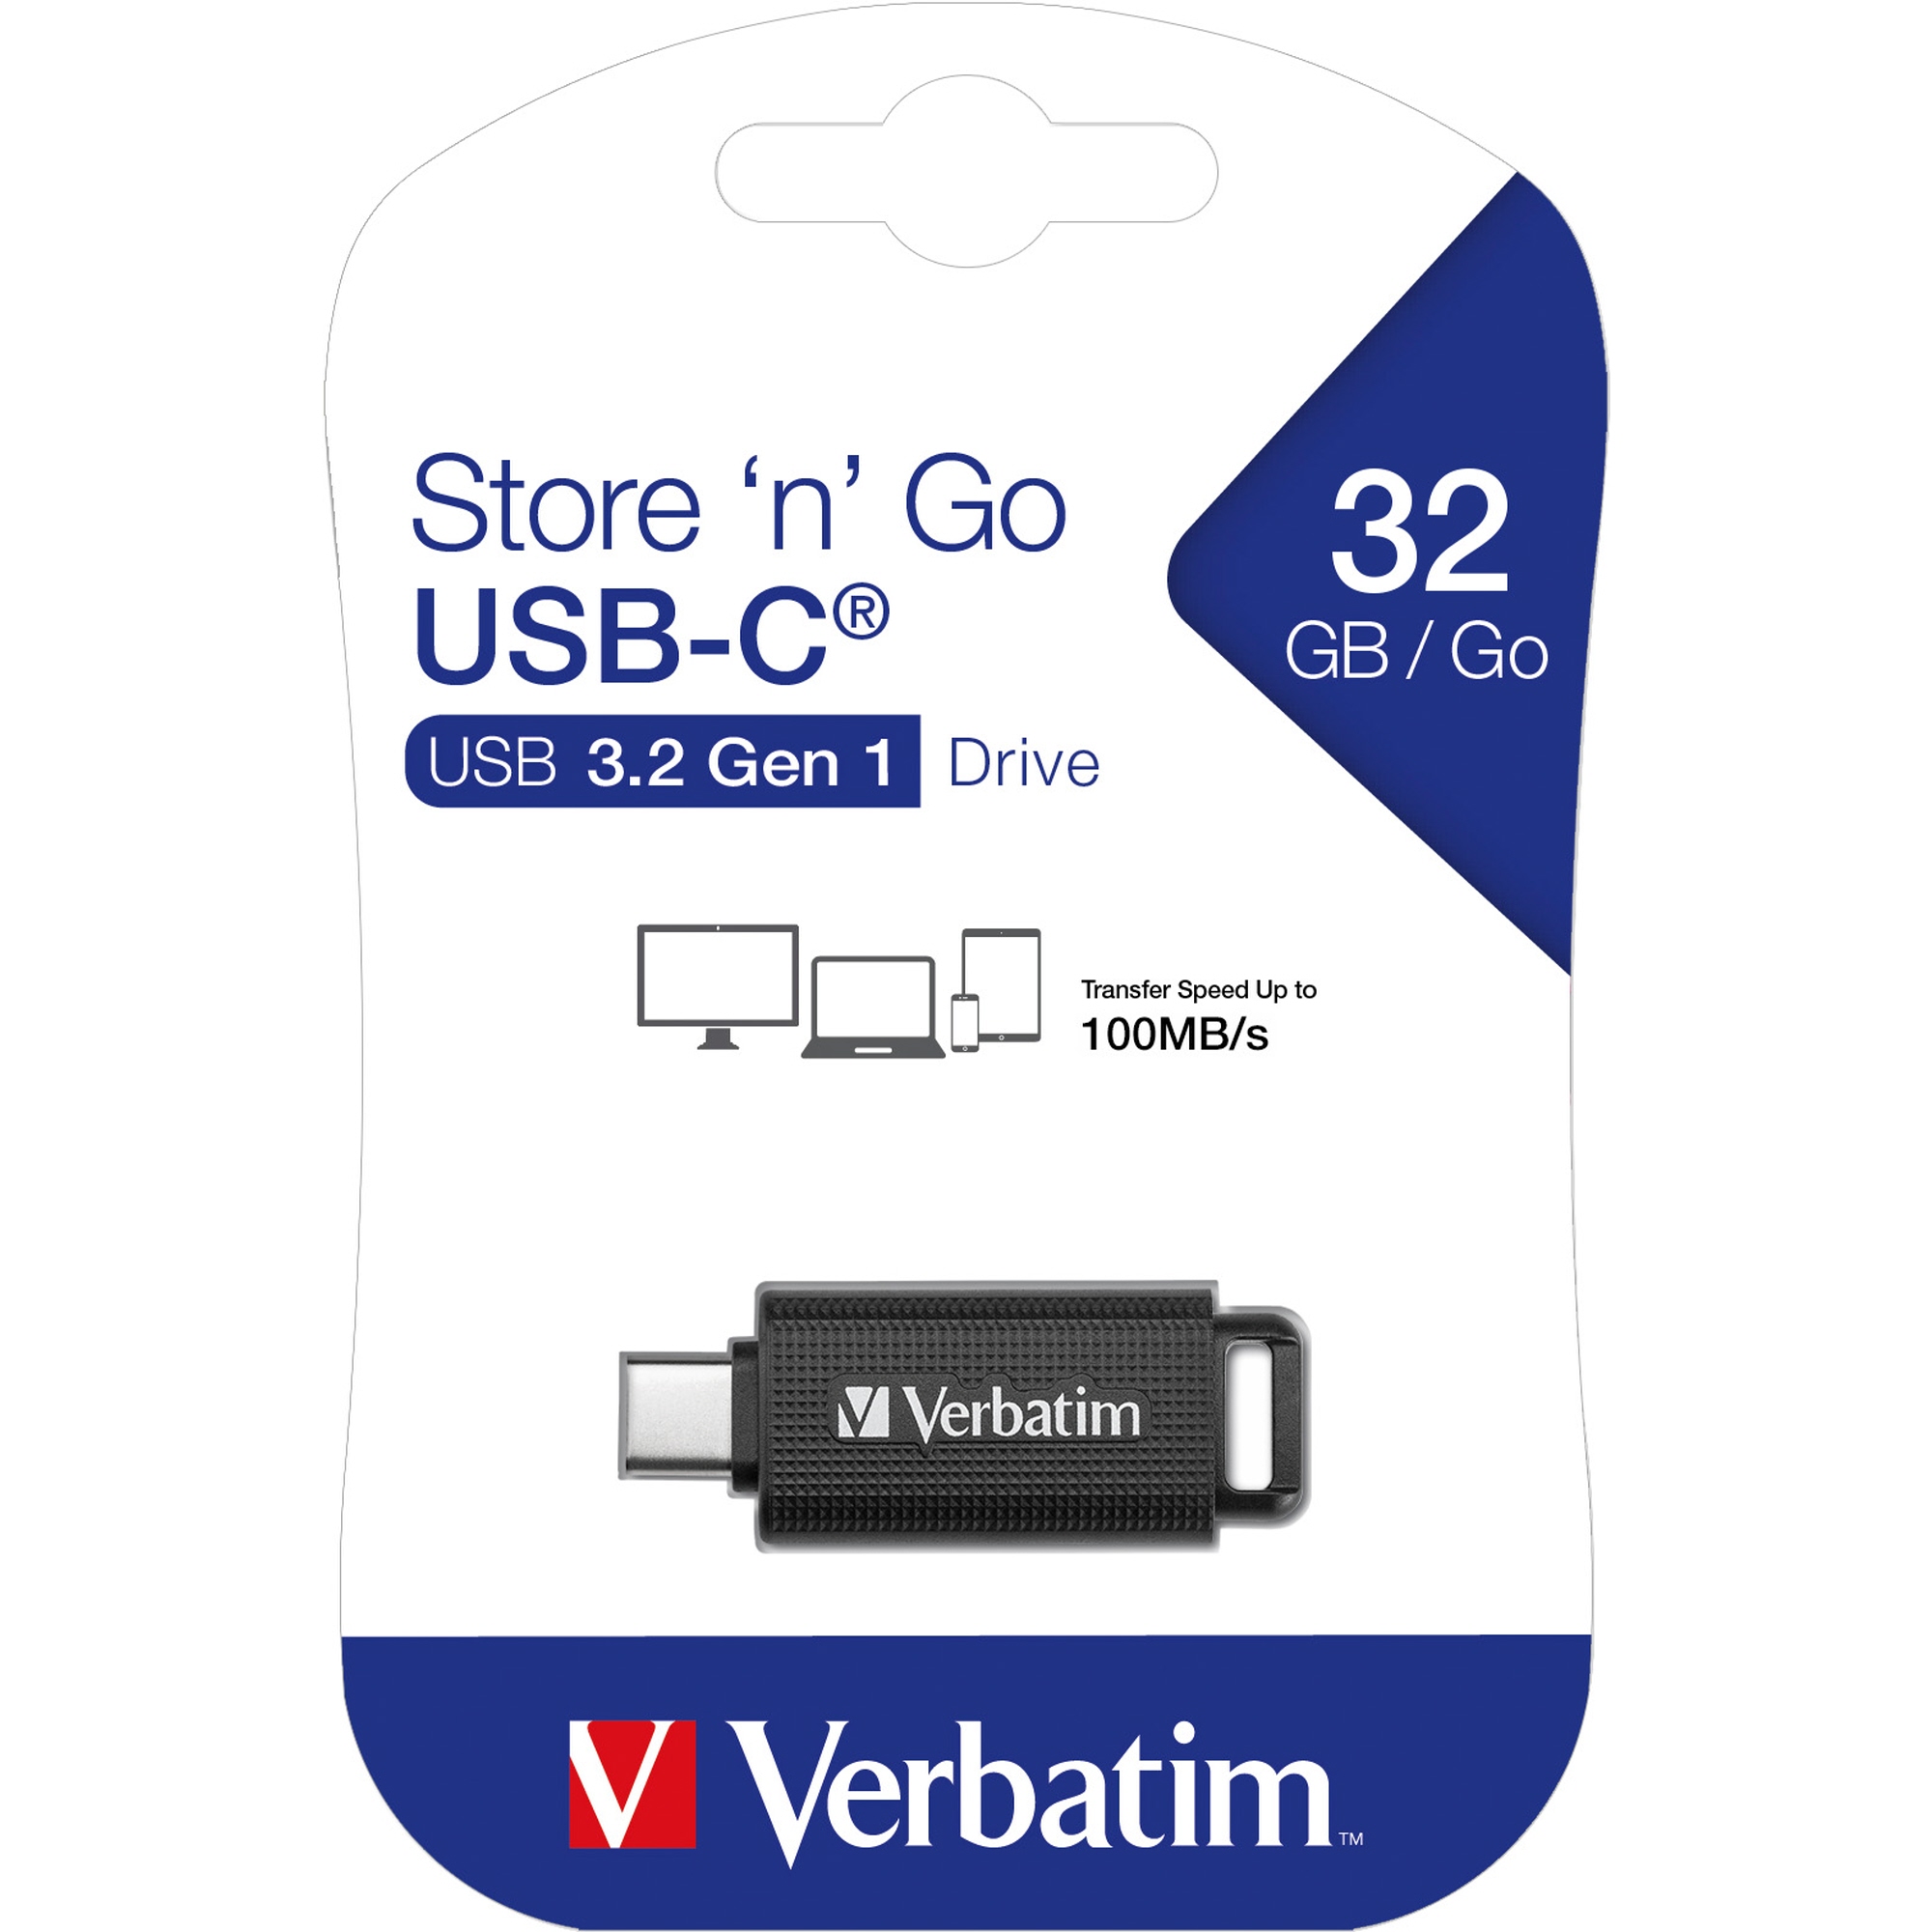 Verbatim USB-Stick Store 'n' Go